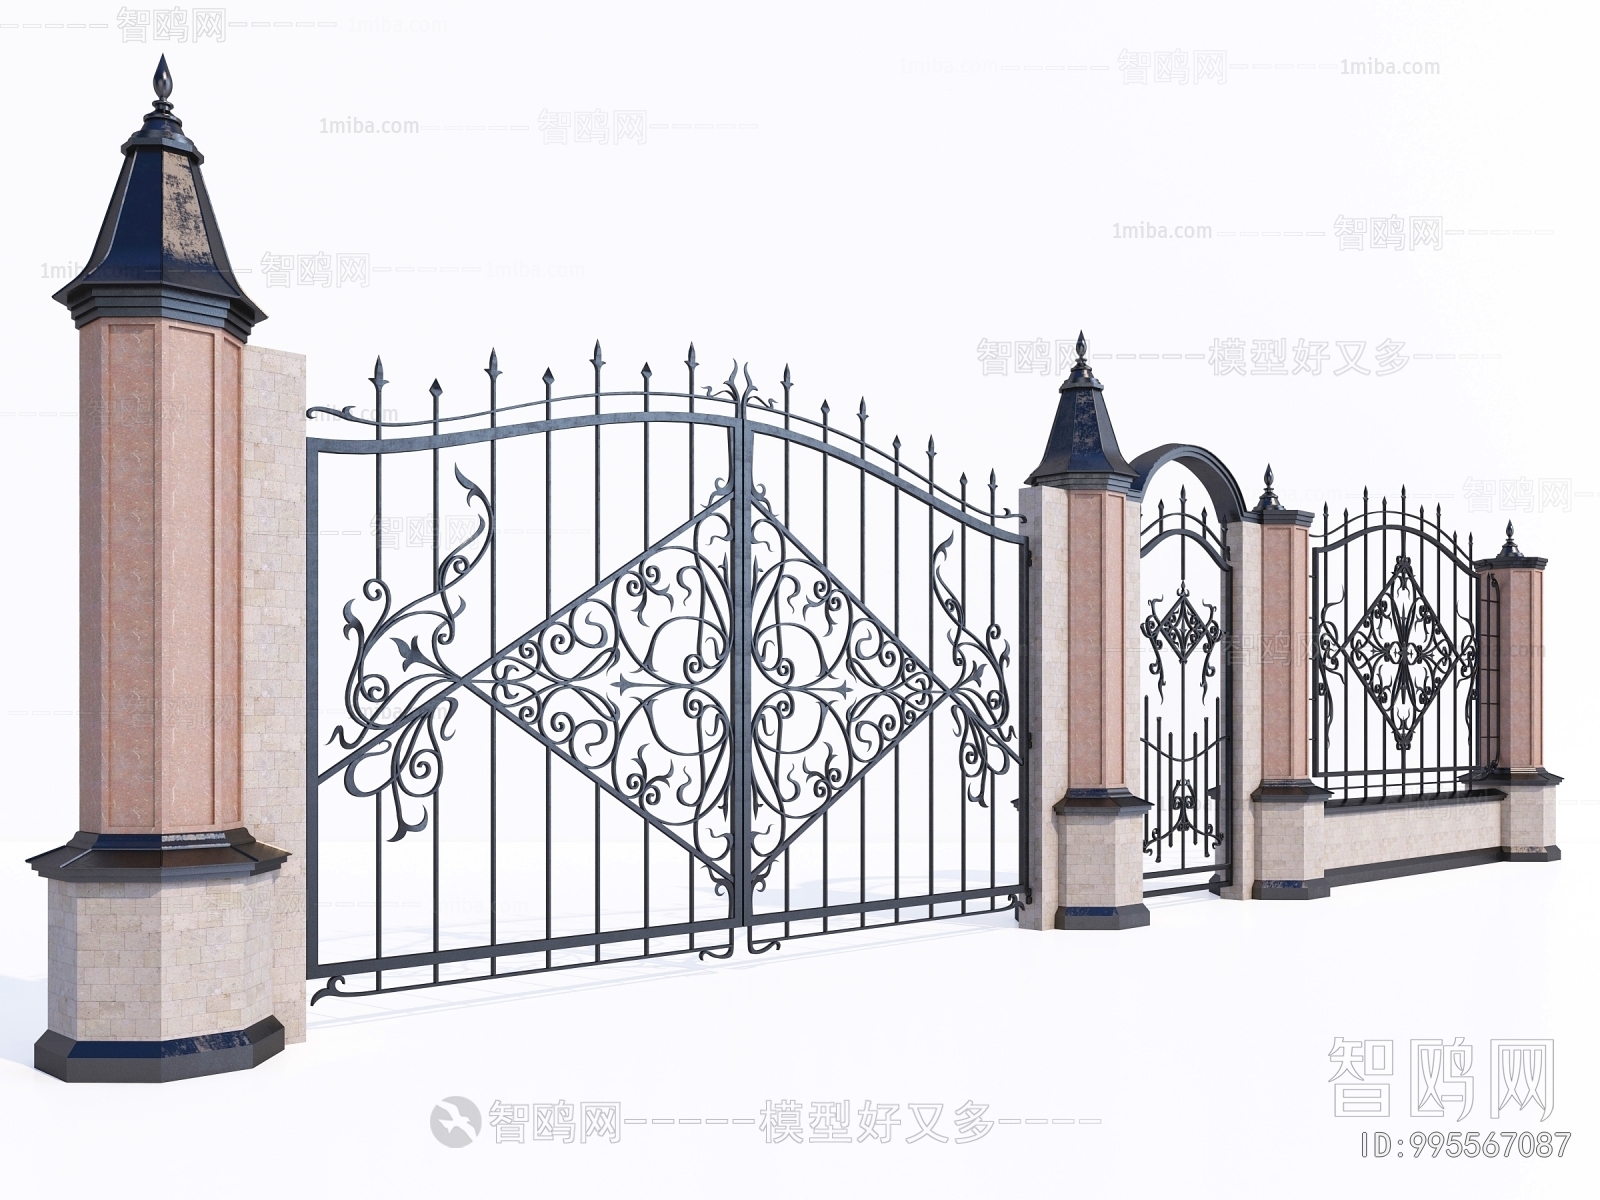 Modern Gate